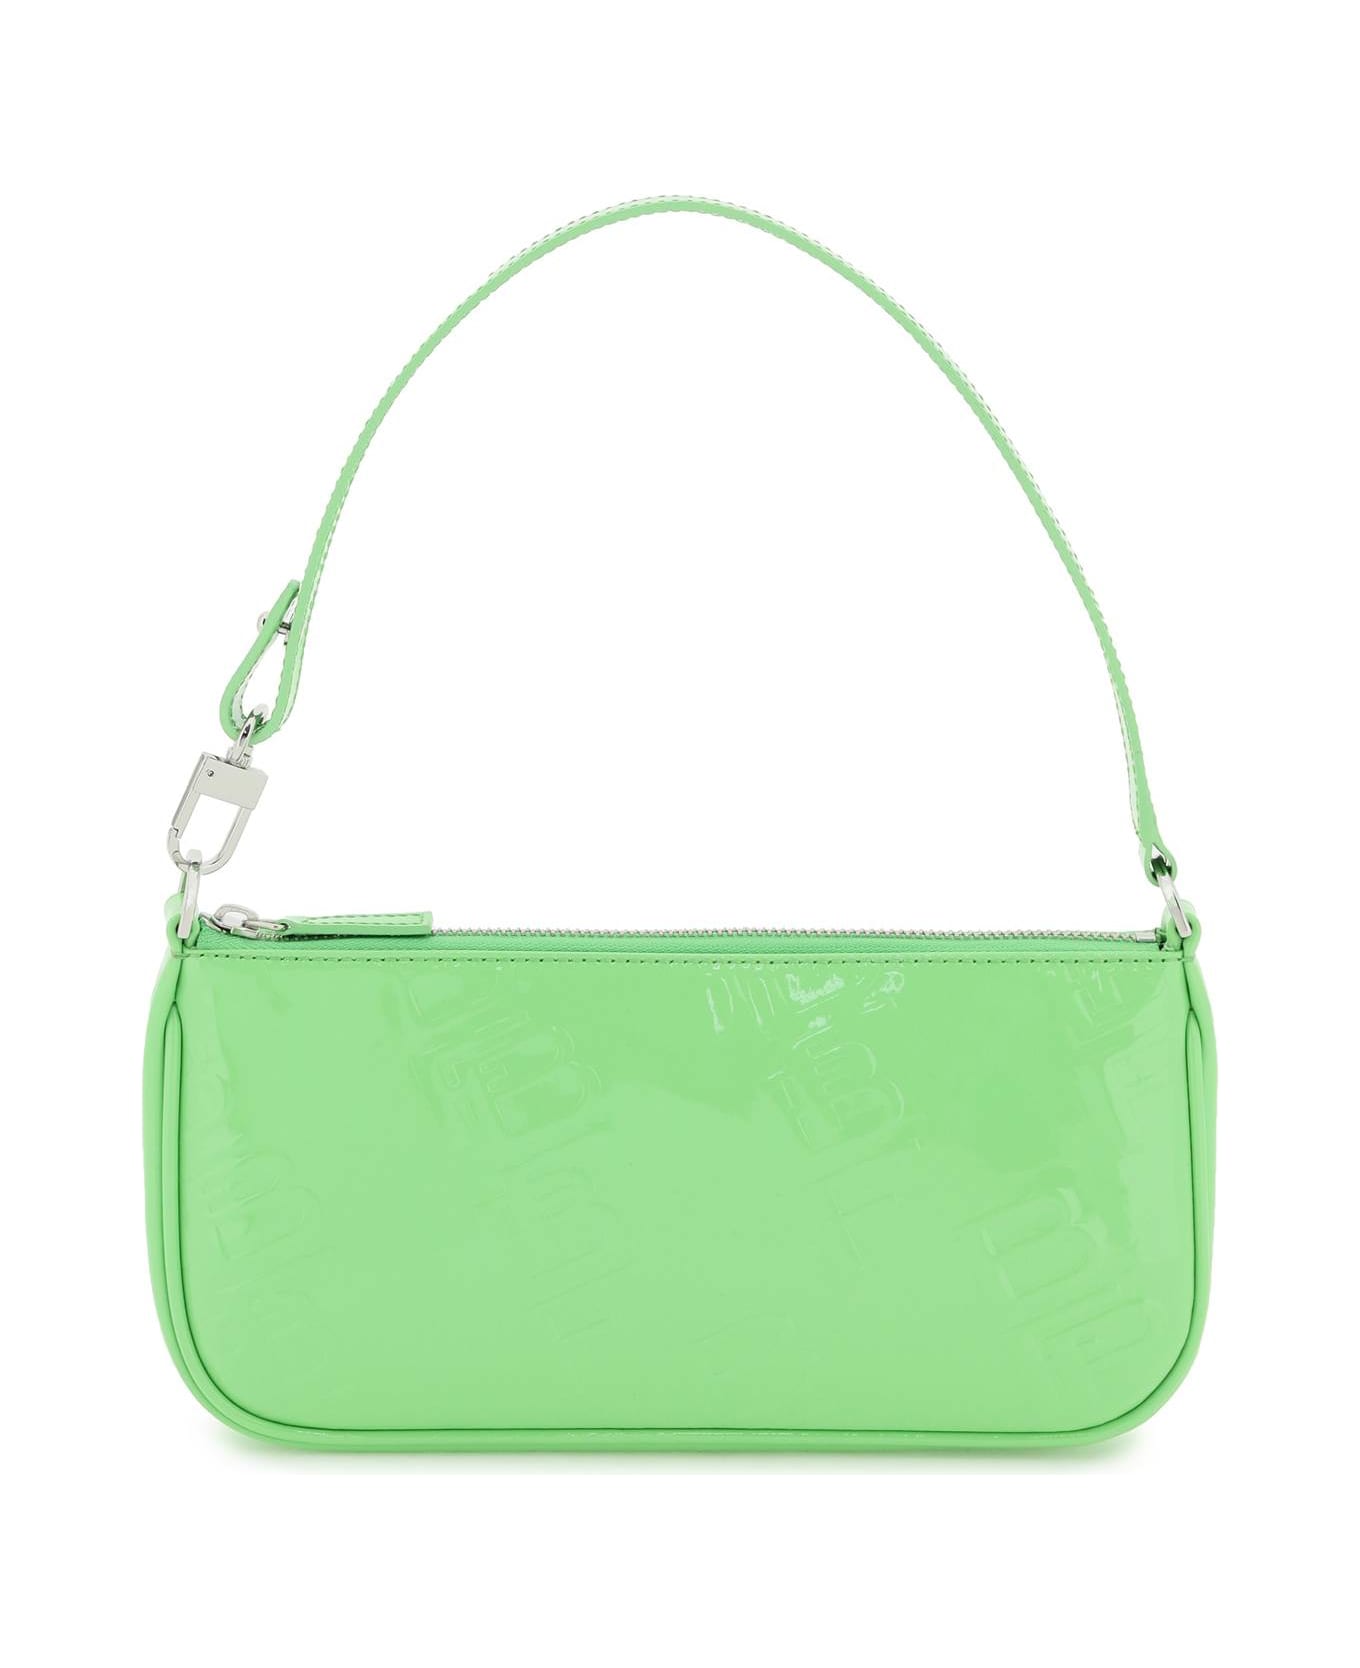 BY FAR Patent Leather 'rachel' Bag - FRESH GREEN (Green)